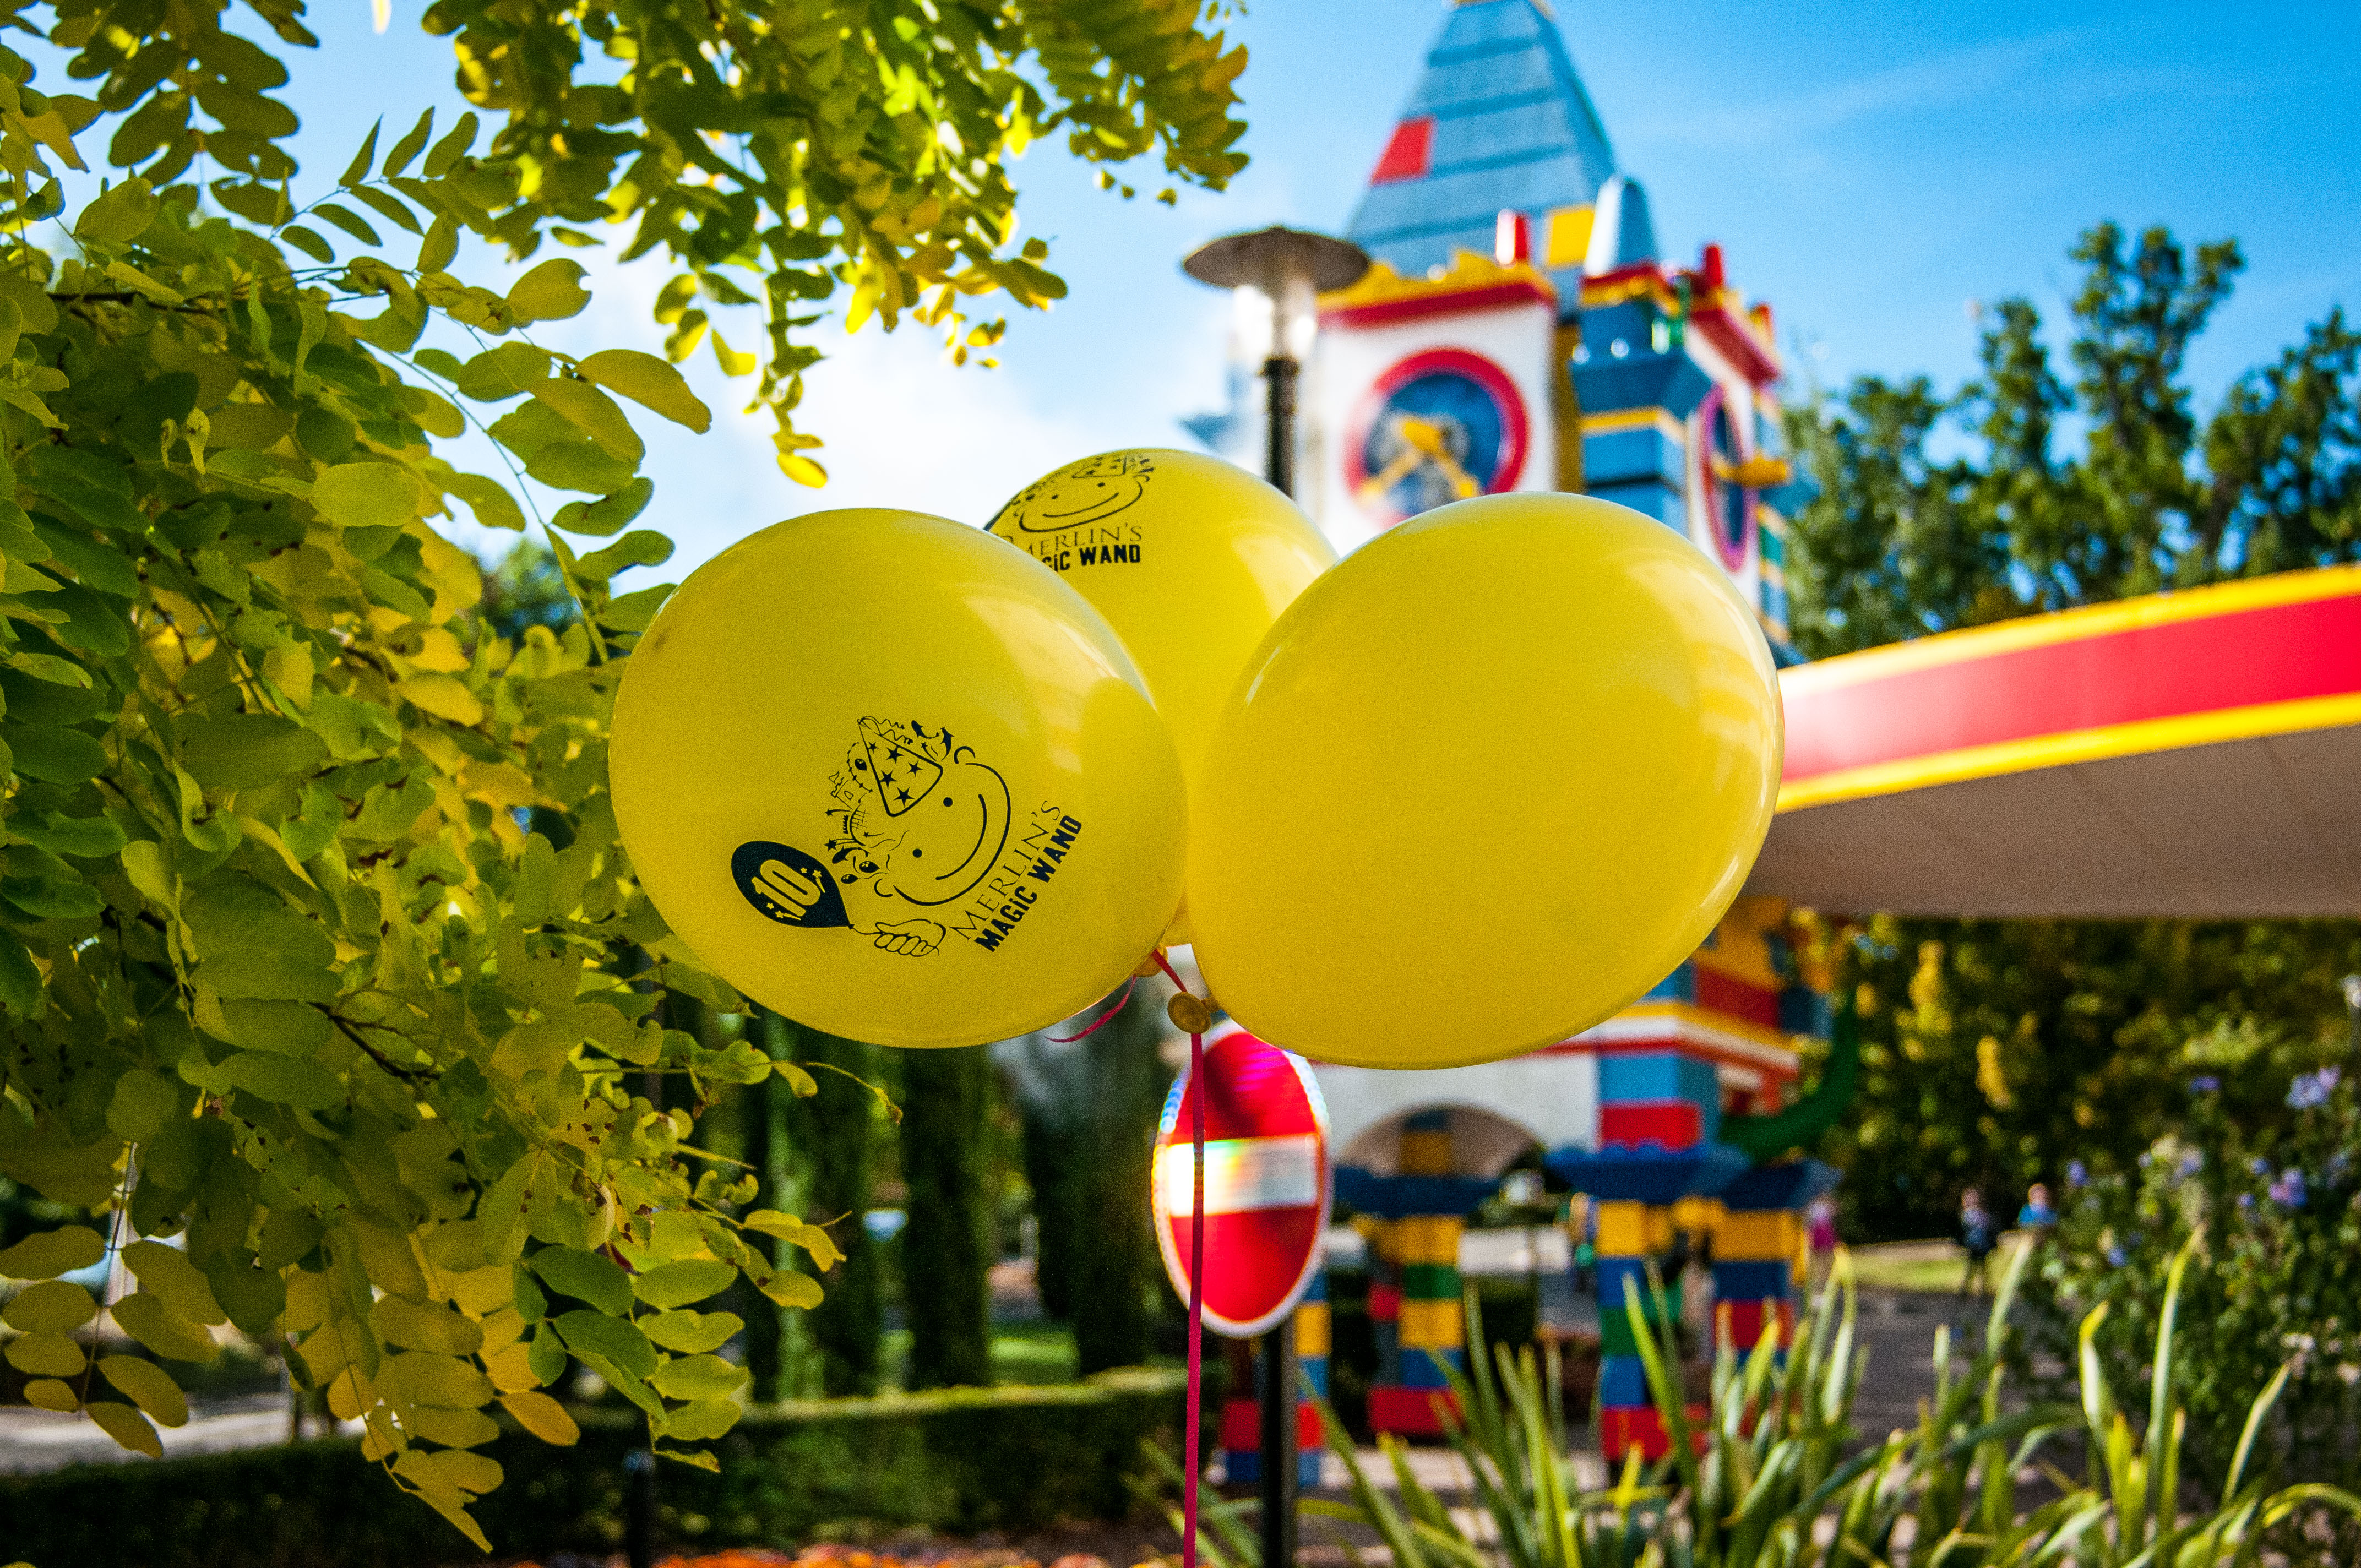 Merlin's Magic Wand Balloons outside the LEGOLAND Resort Hotel